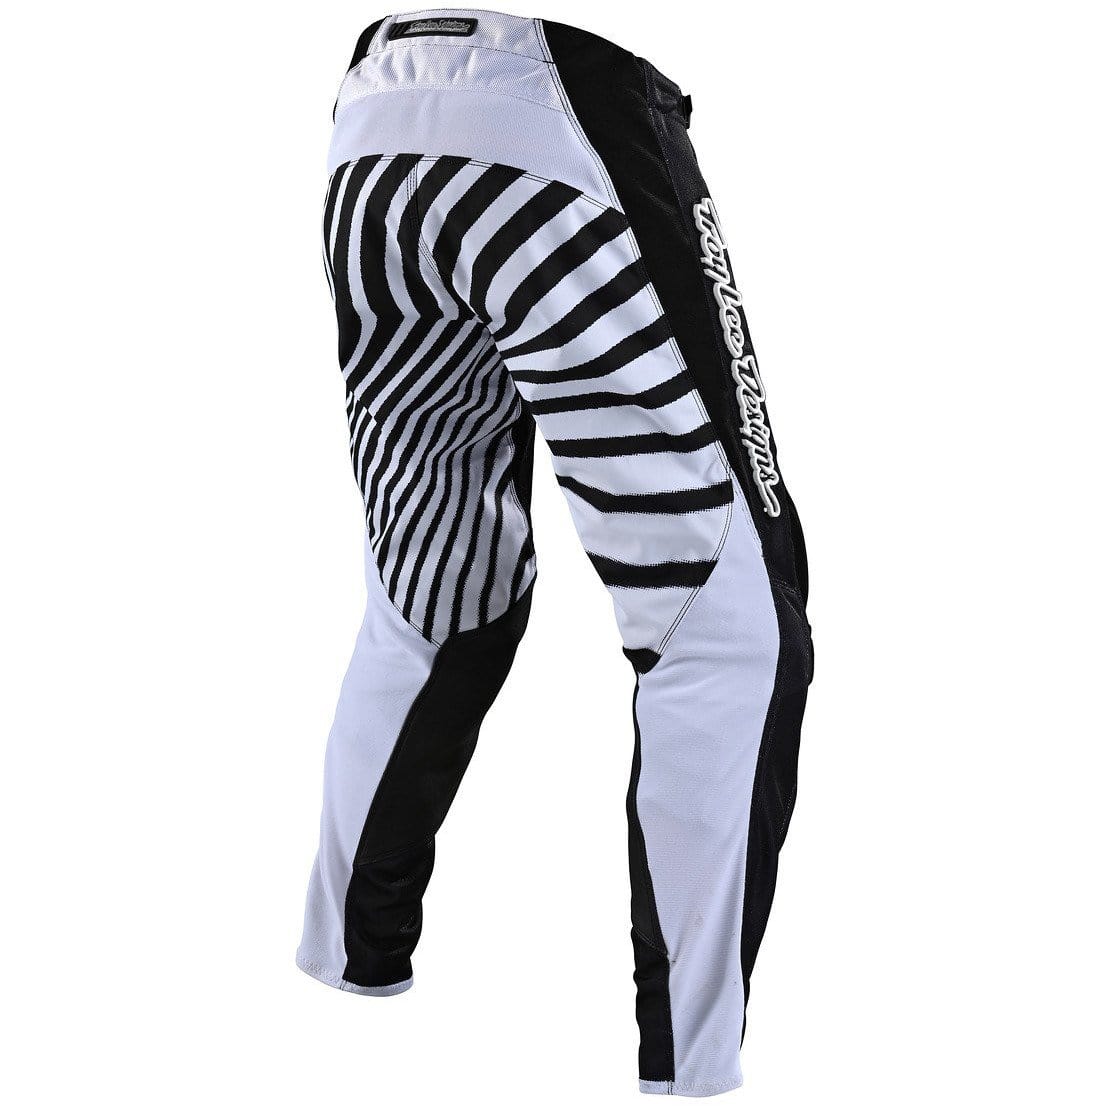 Troy Lee Designs GP AIR Pants Drift - Black/White 8Lines Shop - Fast Shipping